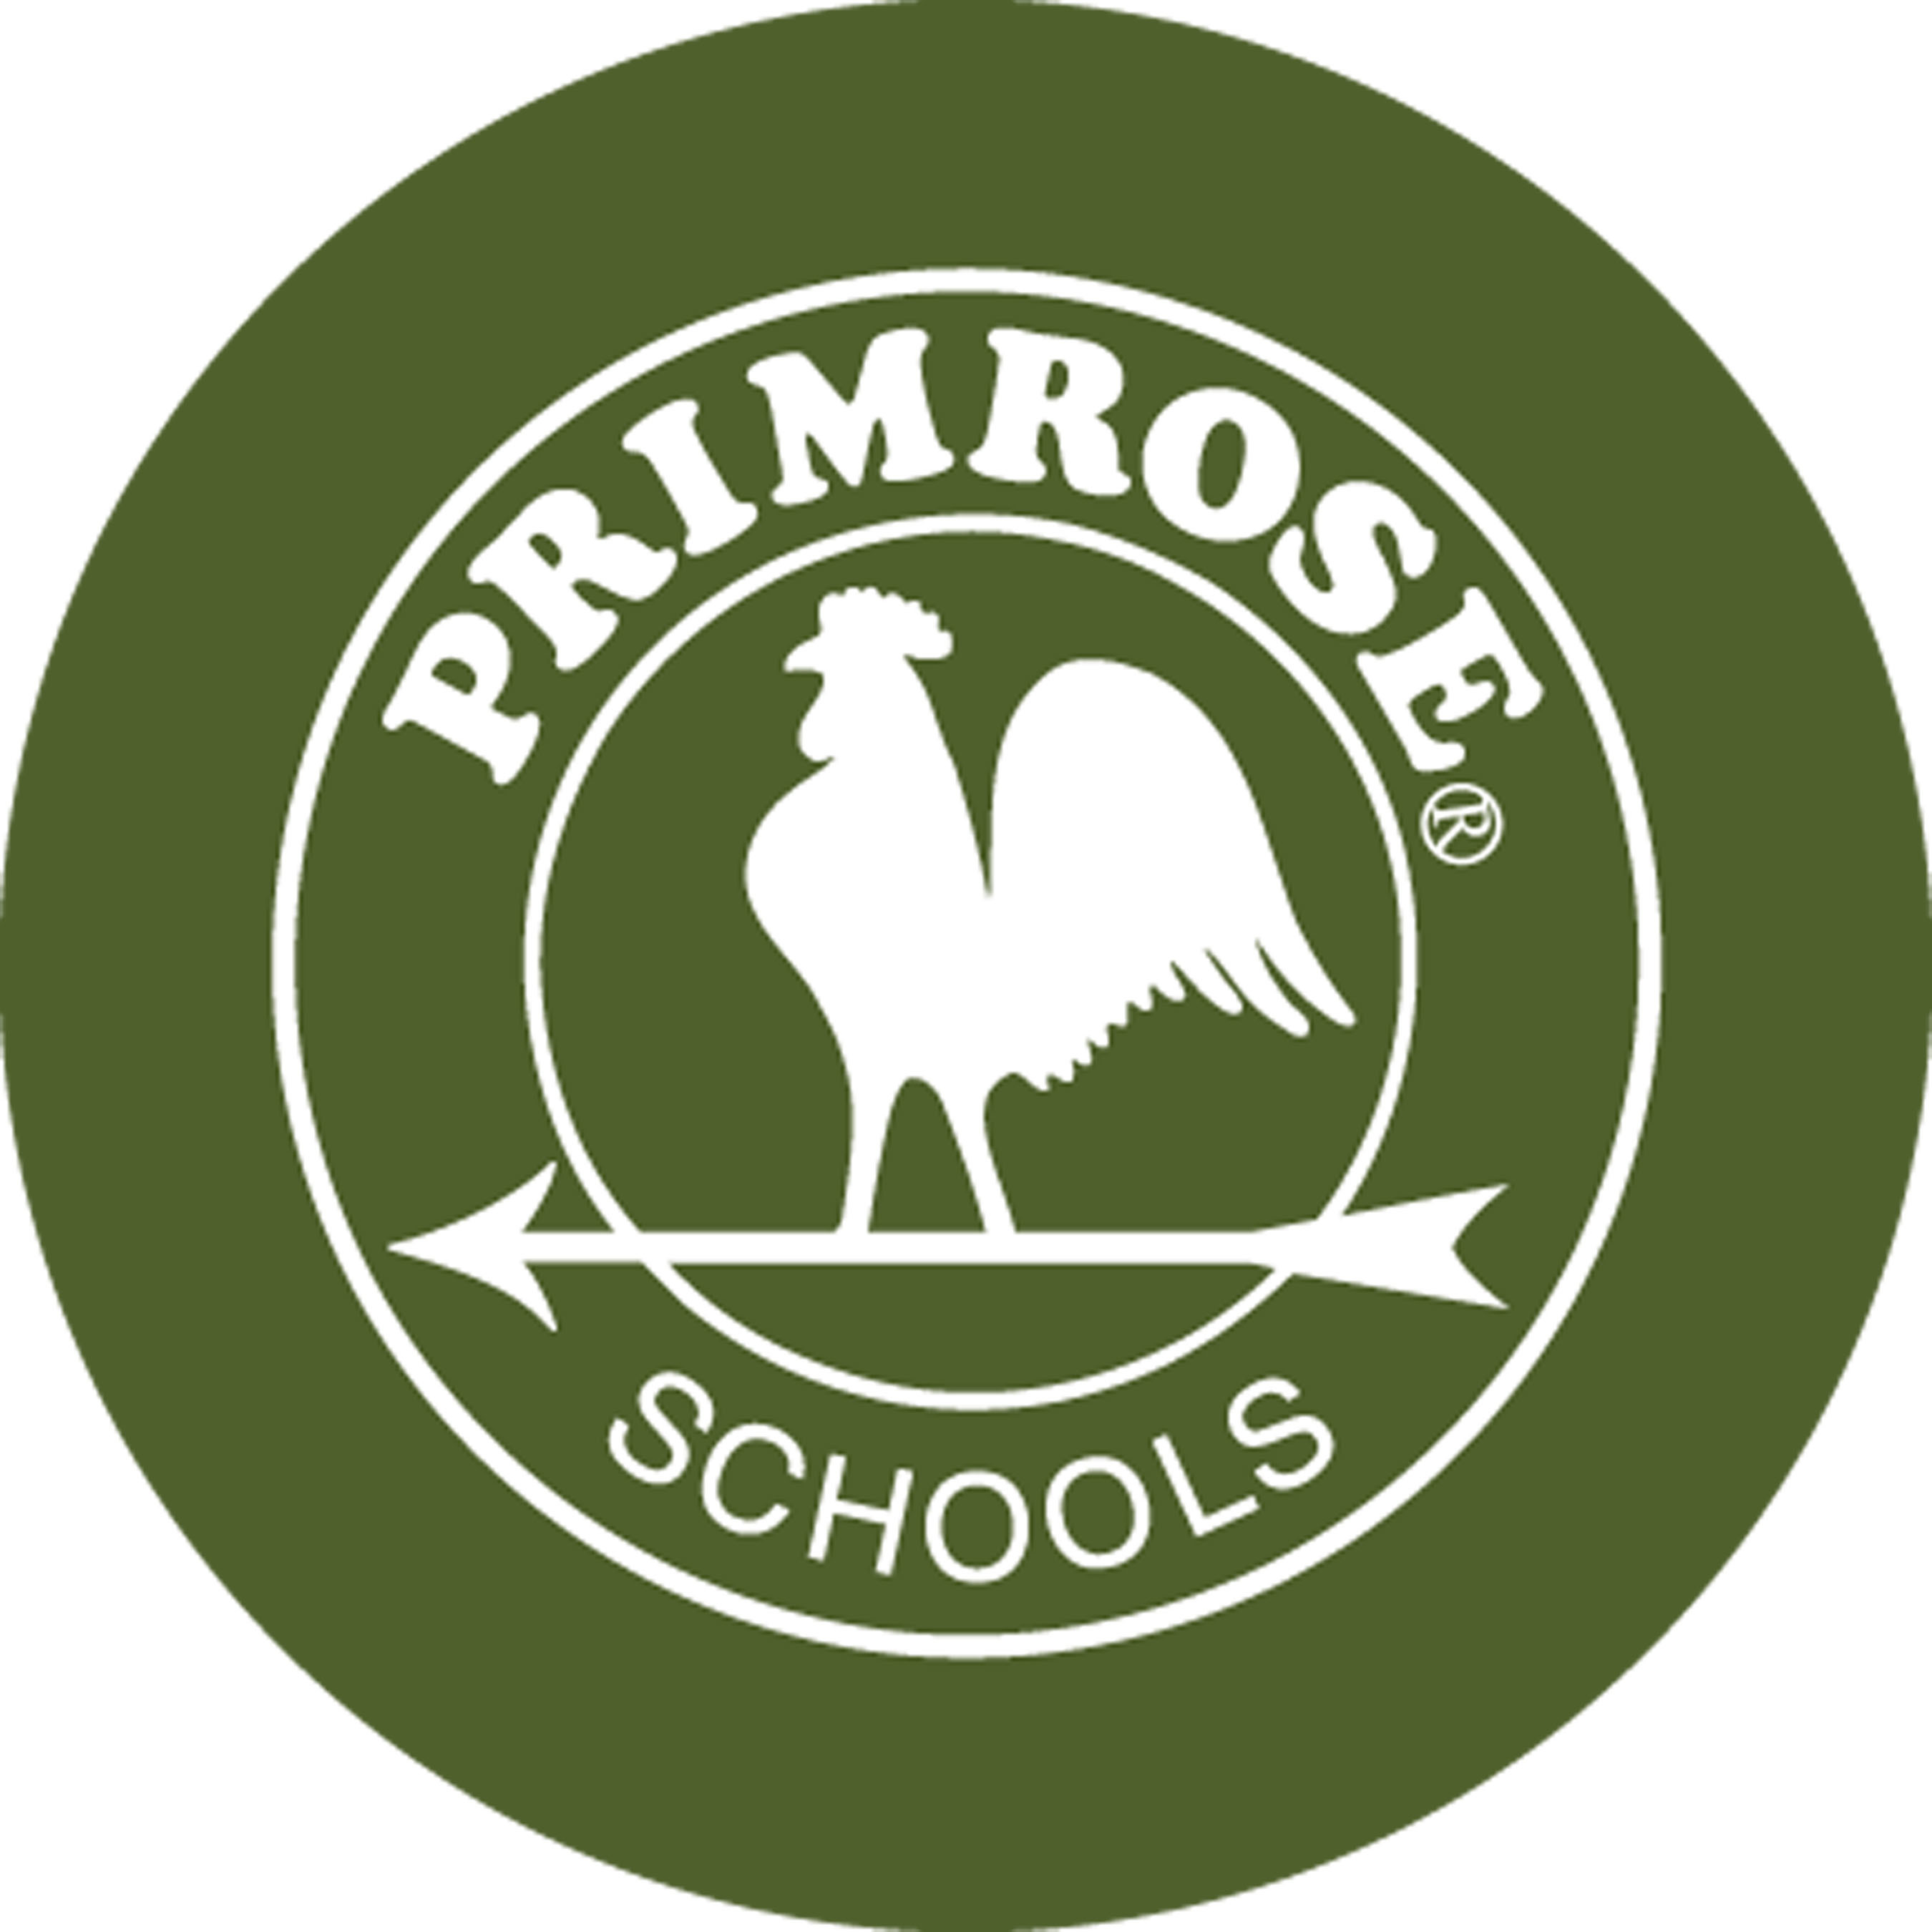 Primrose Schools Logo